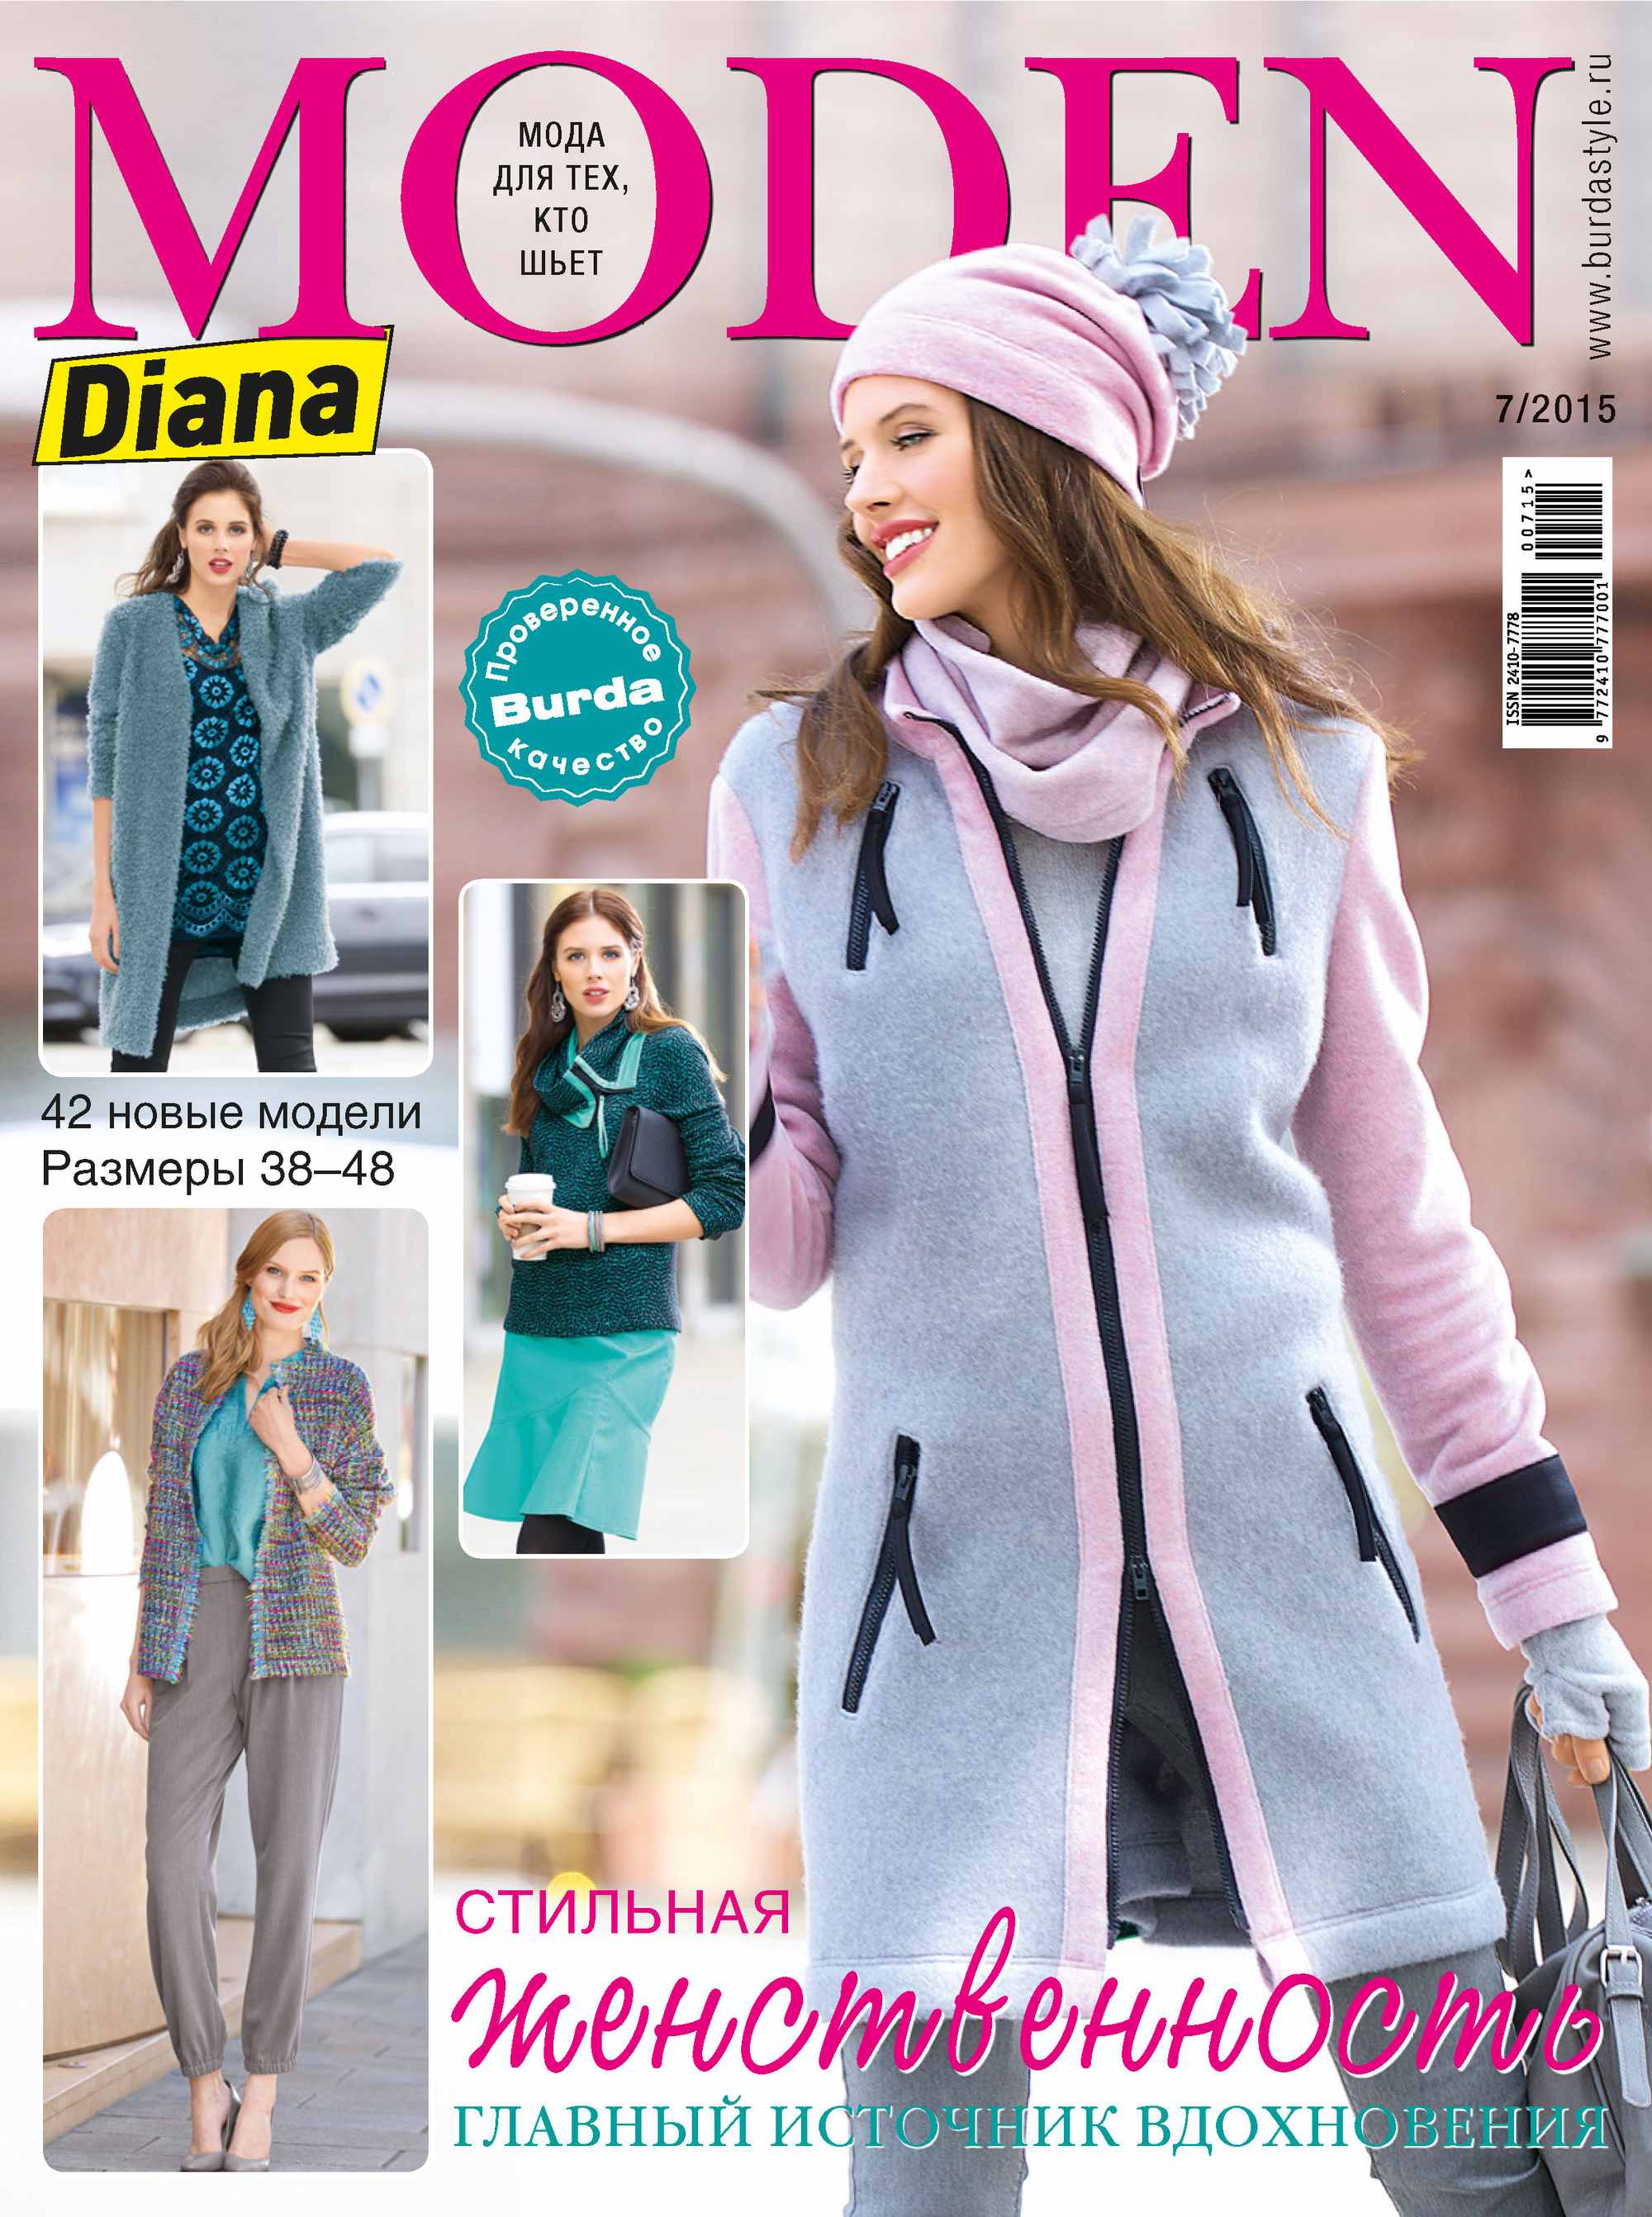 Diana Moden№07/2015